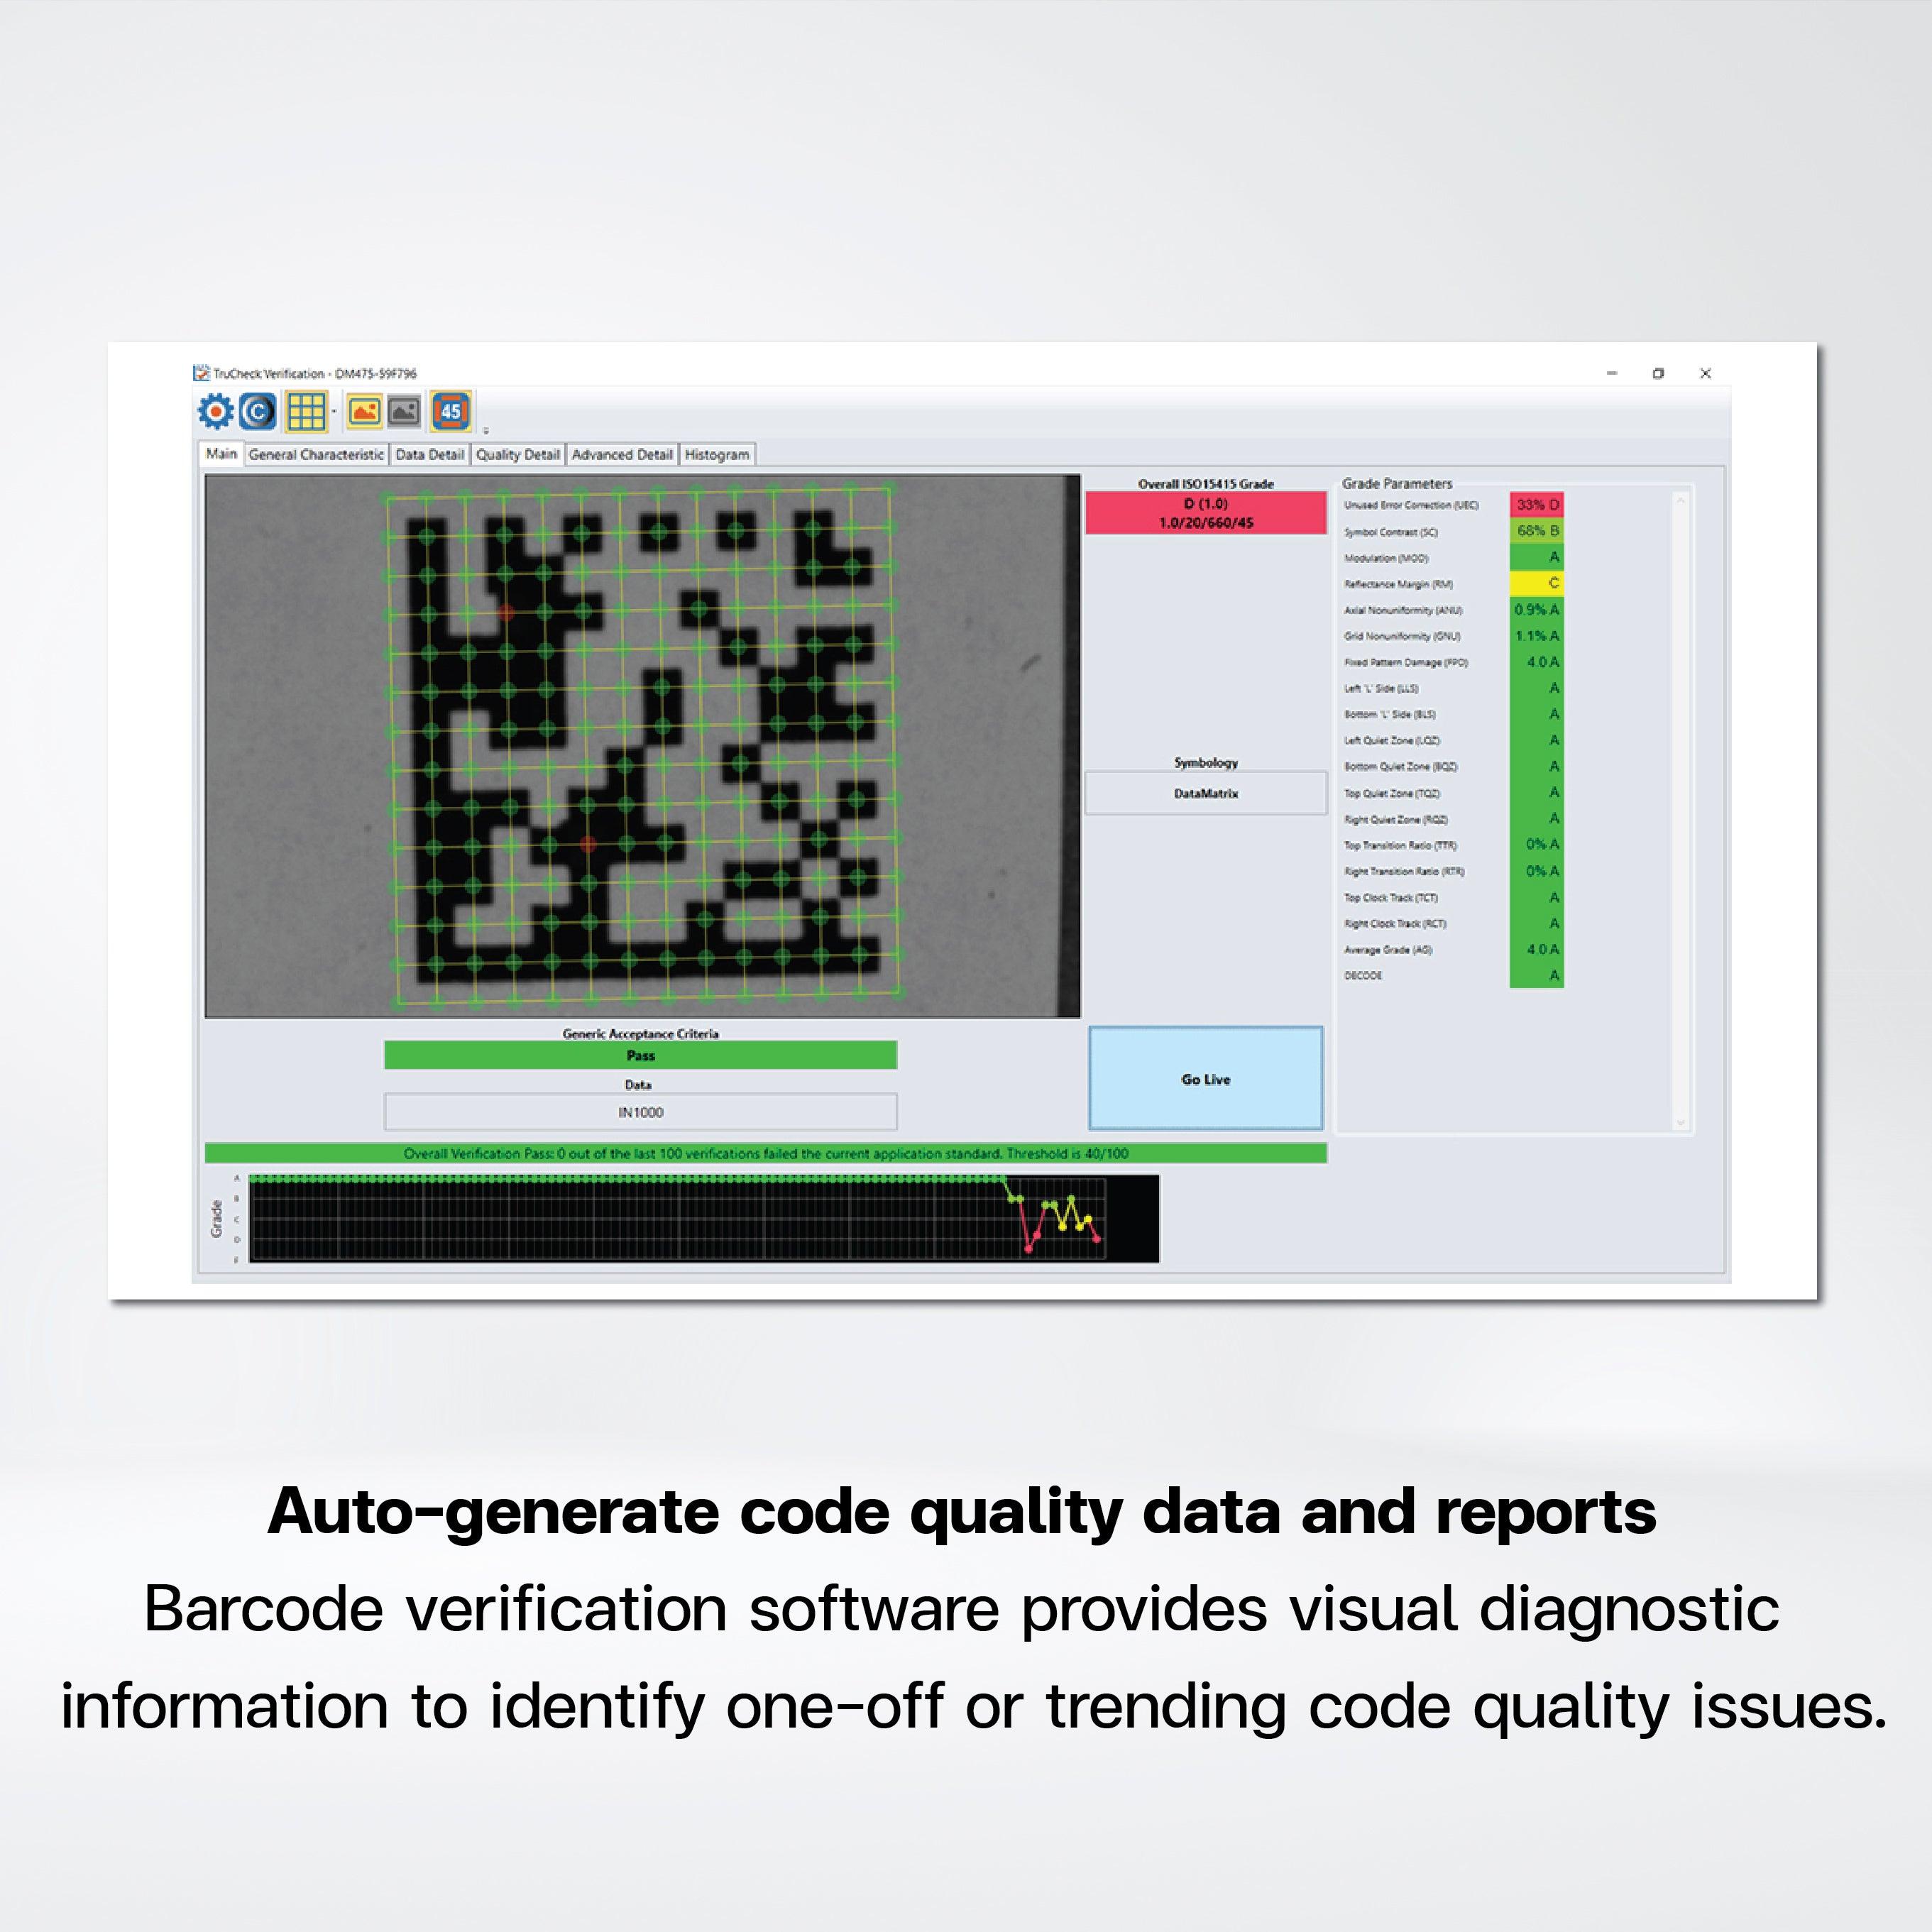 DataMan 475V Series inline barcode verifier - Riverplus